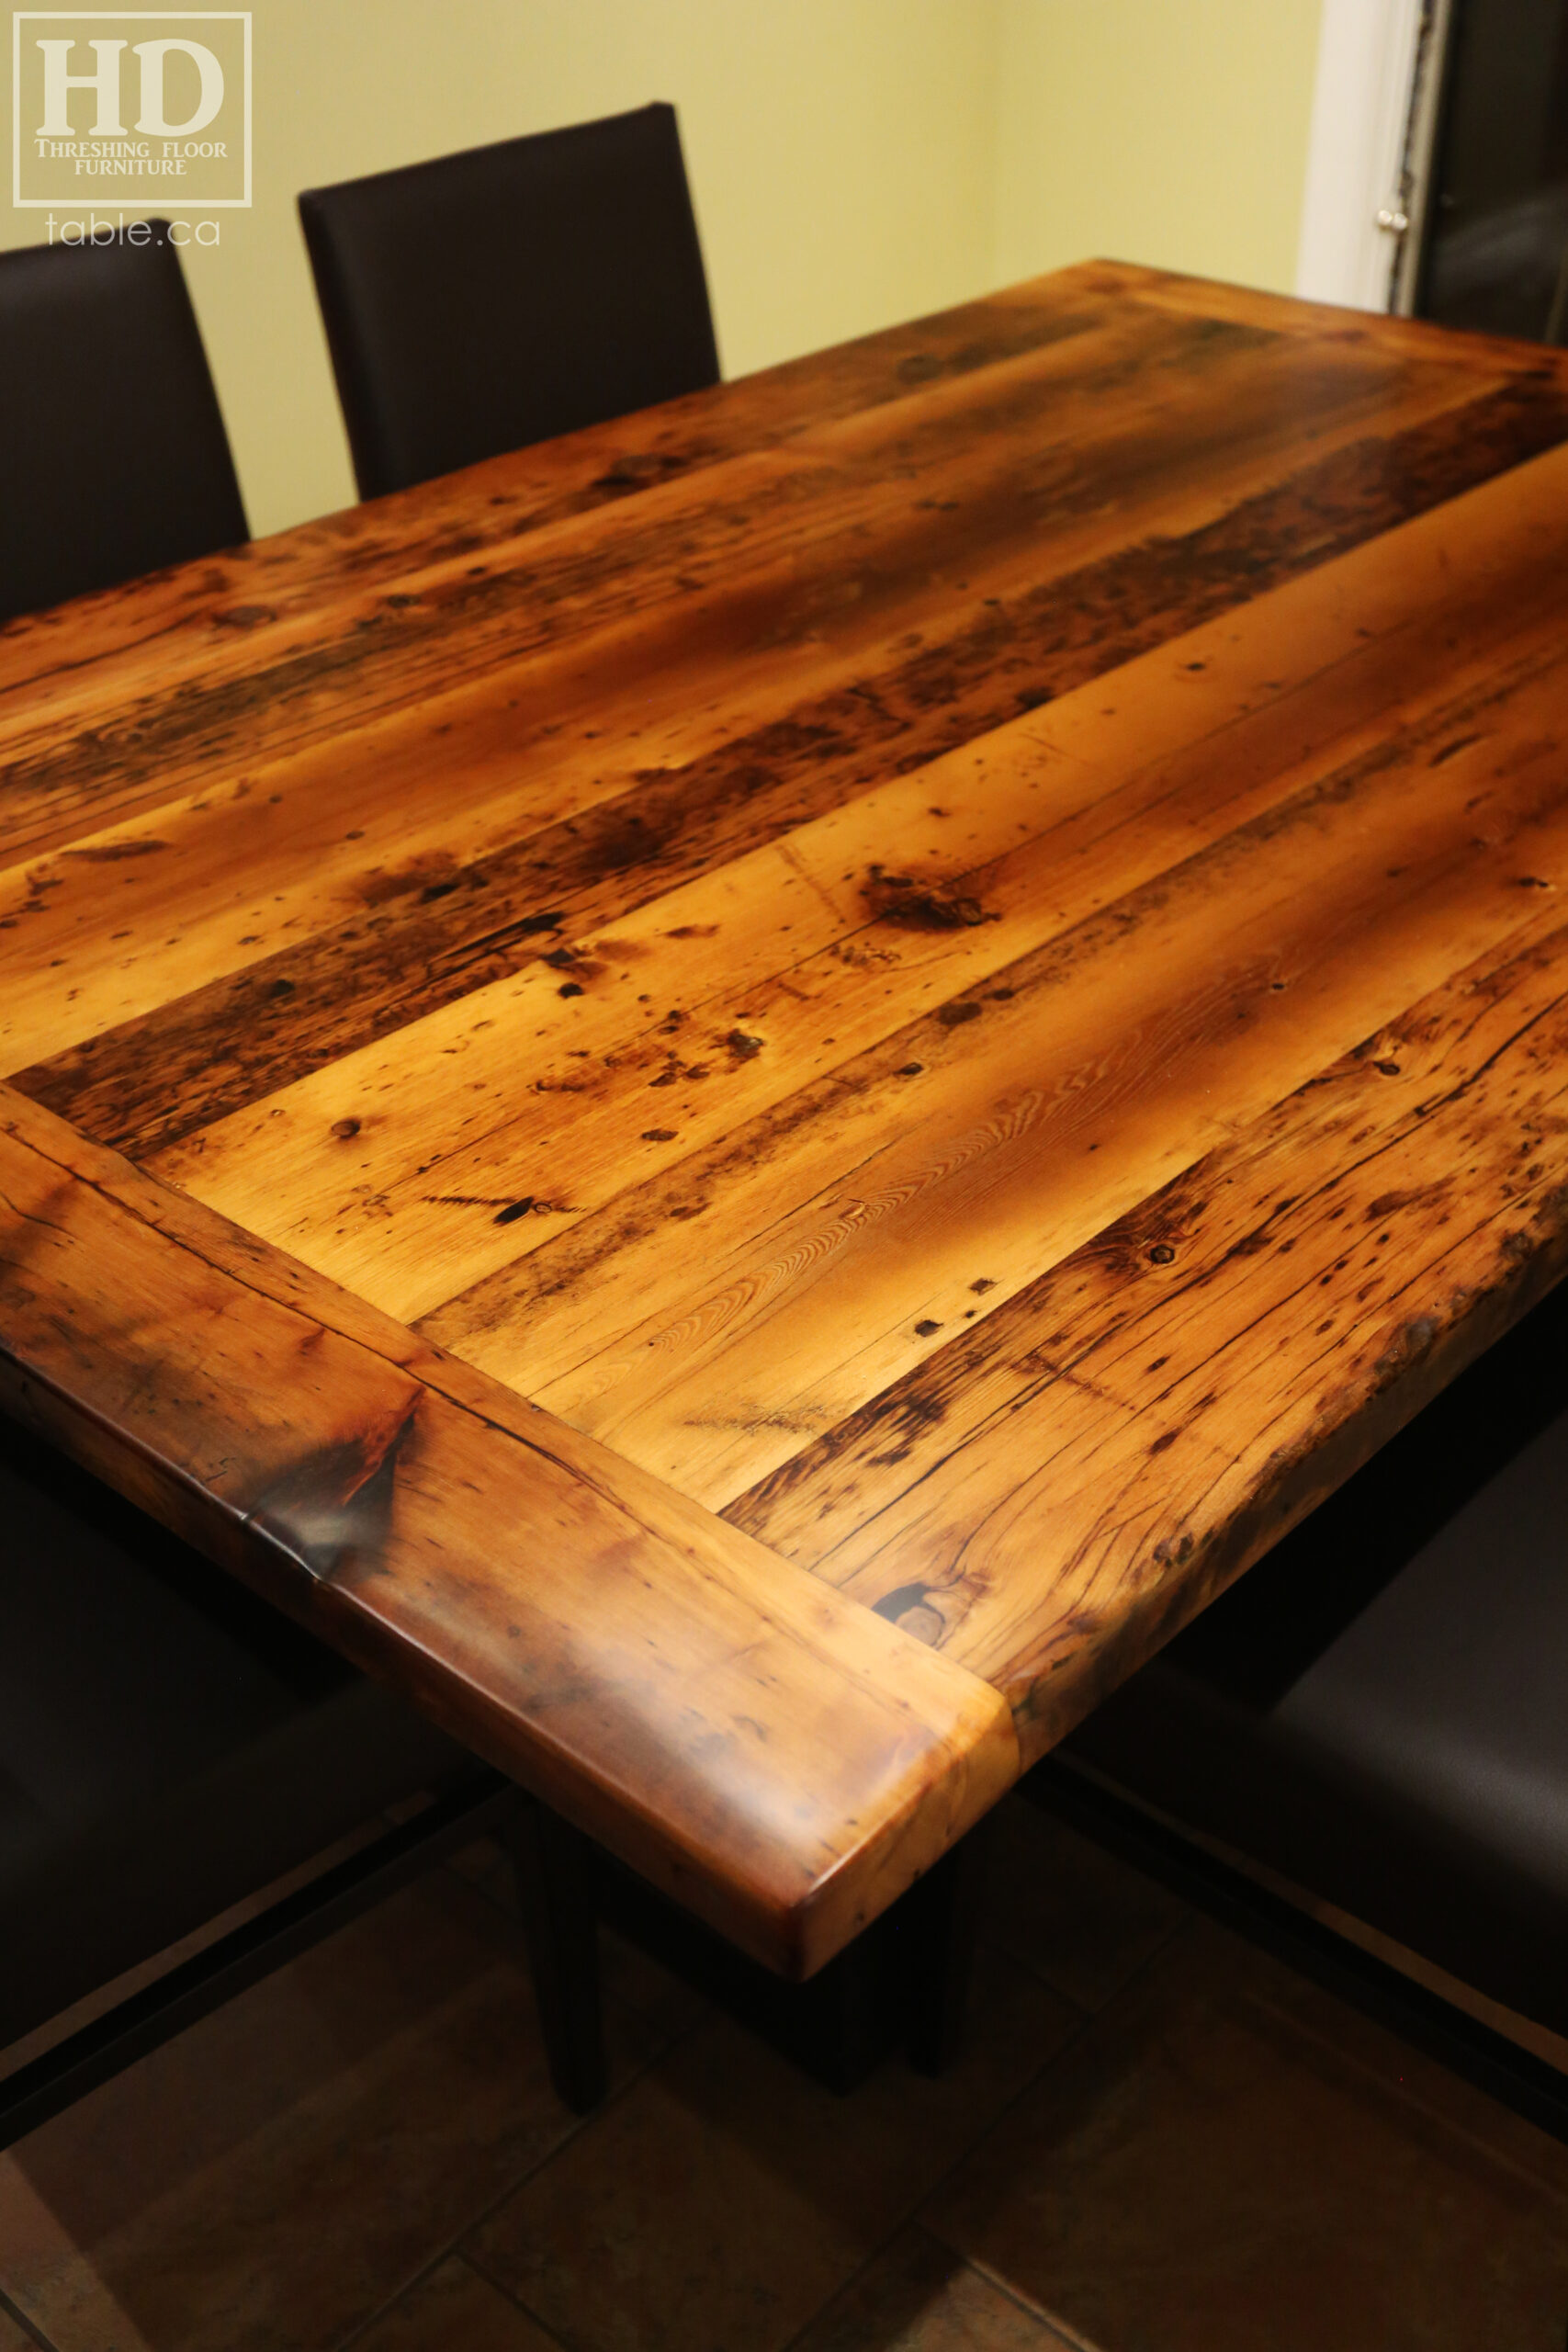 Reclaimed Wood Steel Base Table by HD Threshing Floor Furniture / www.table.ca